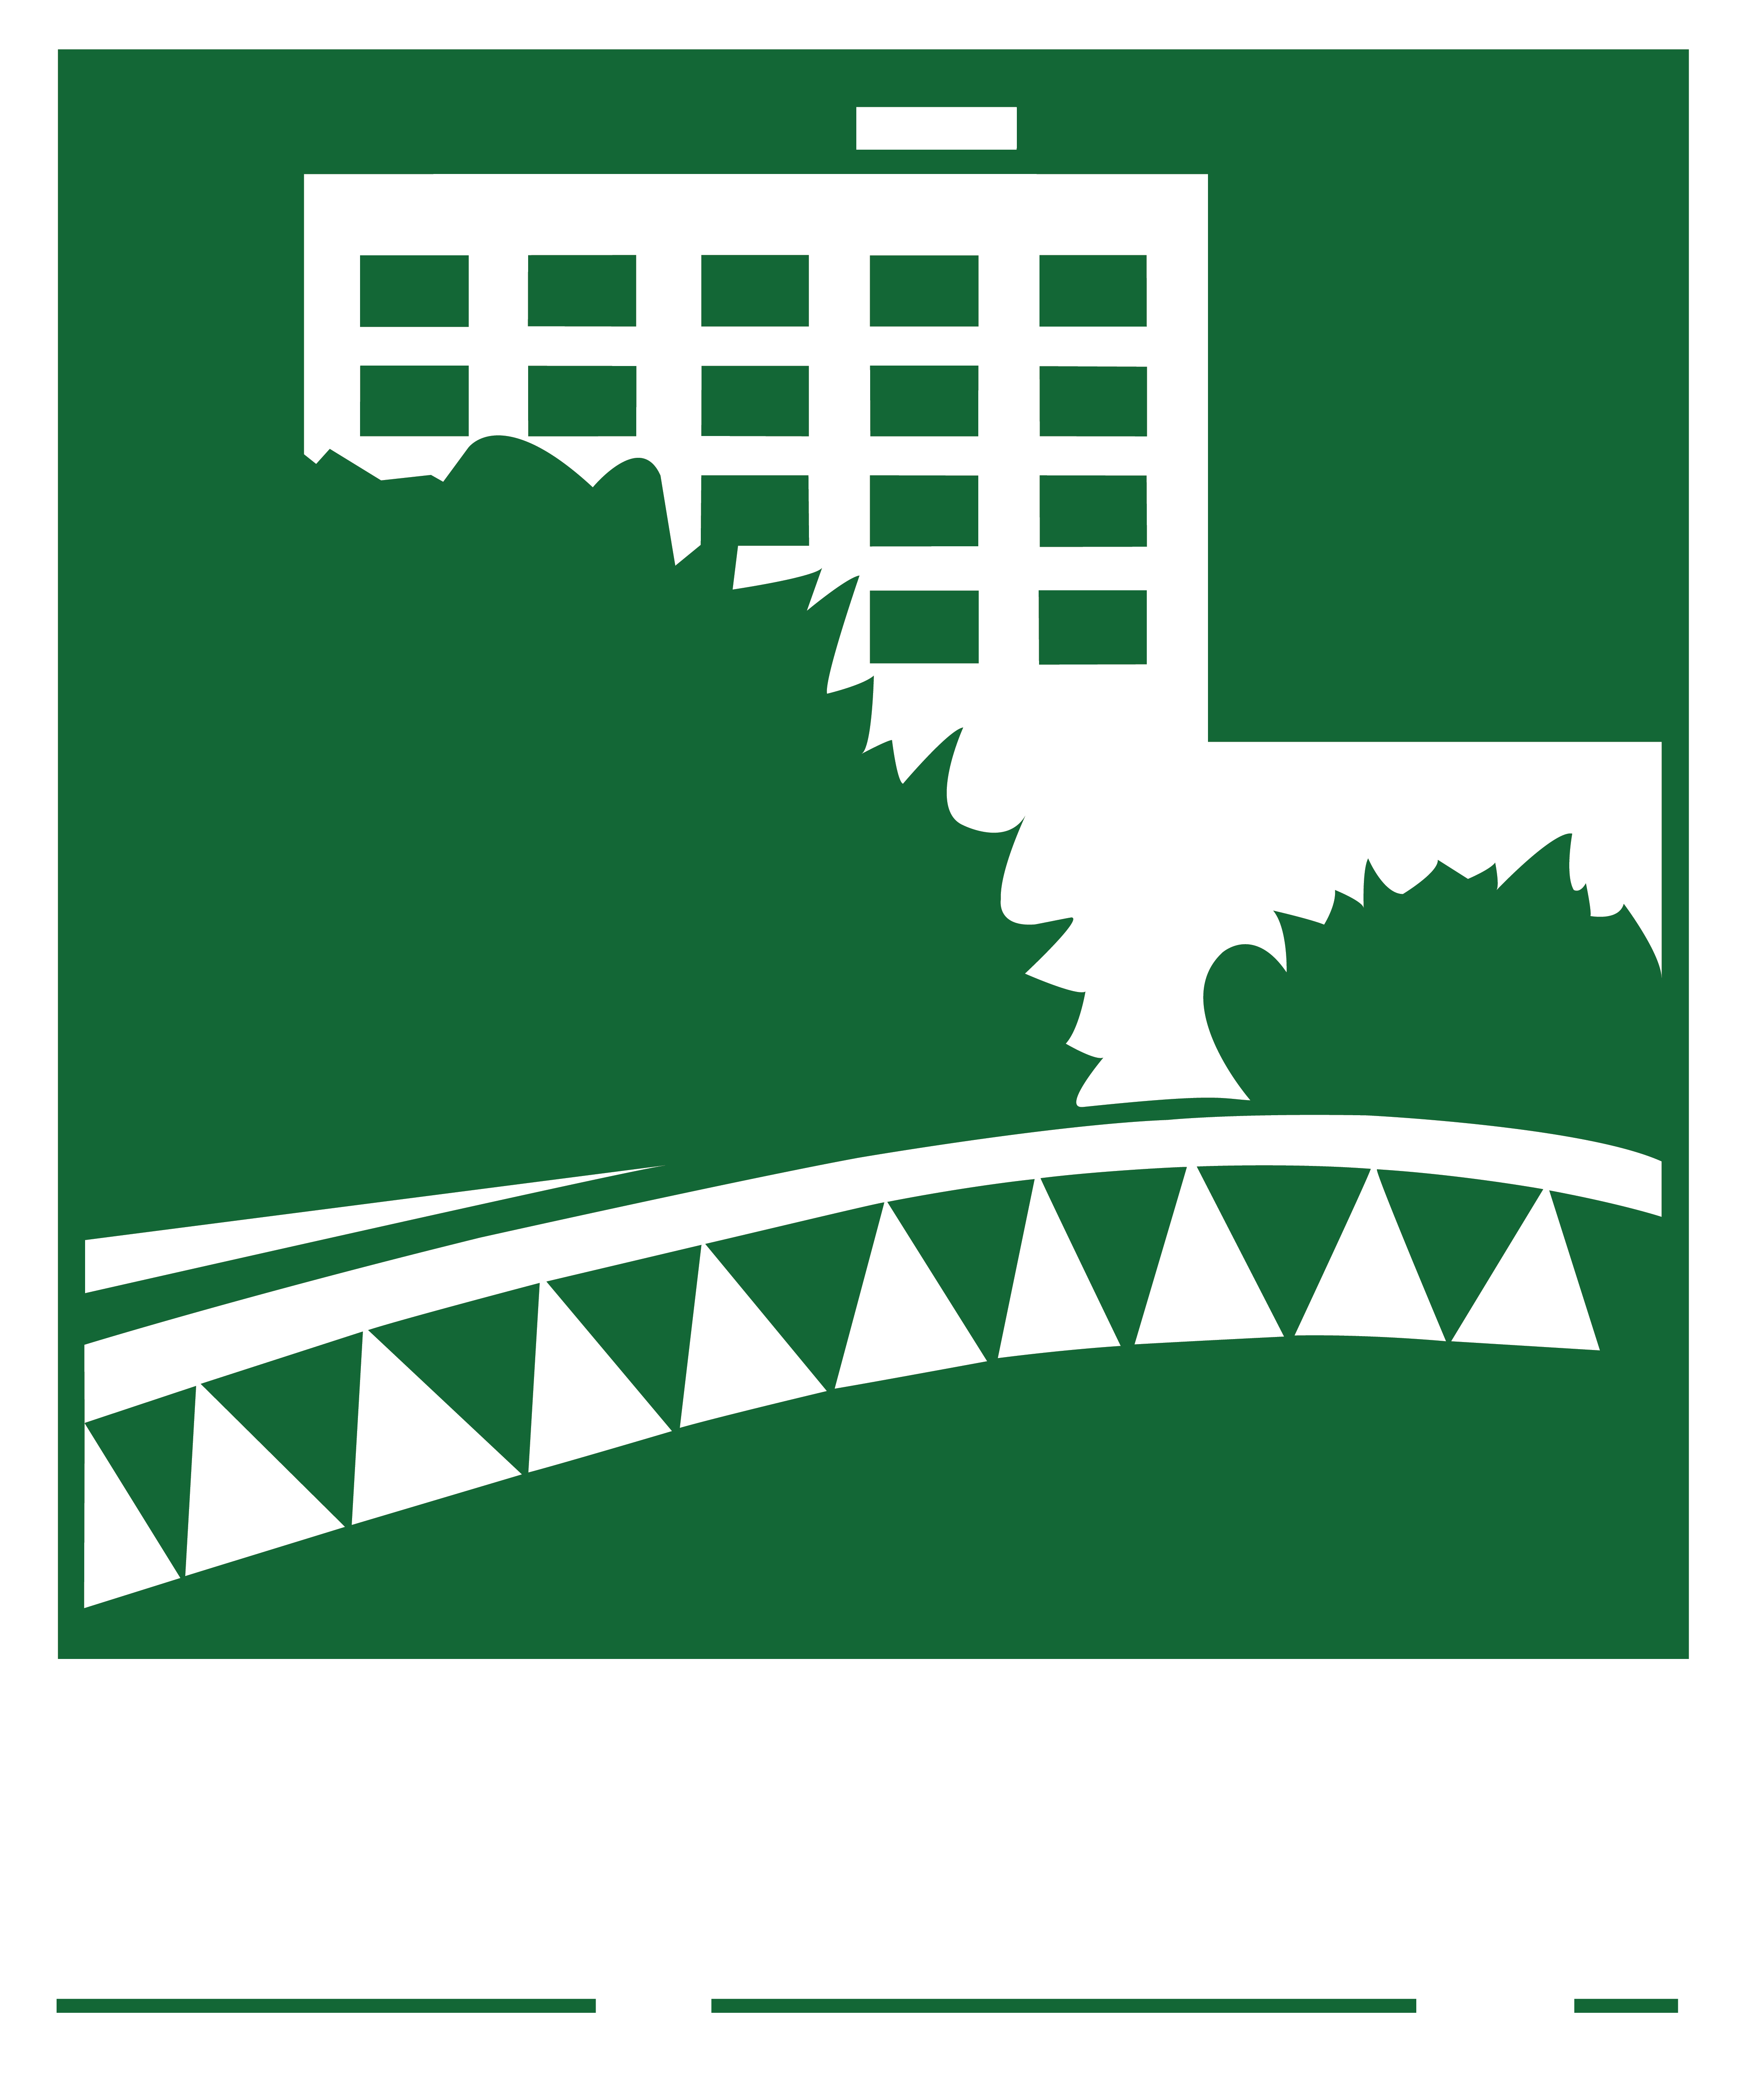 Laney College